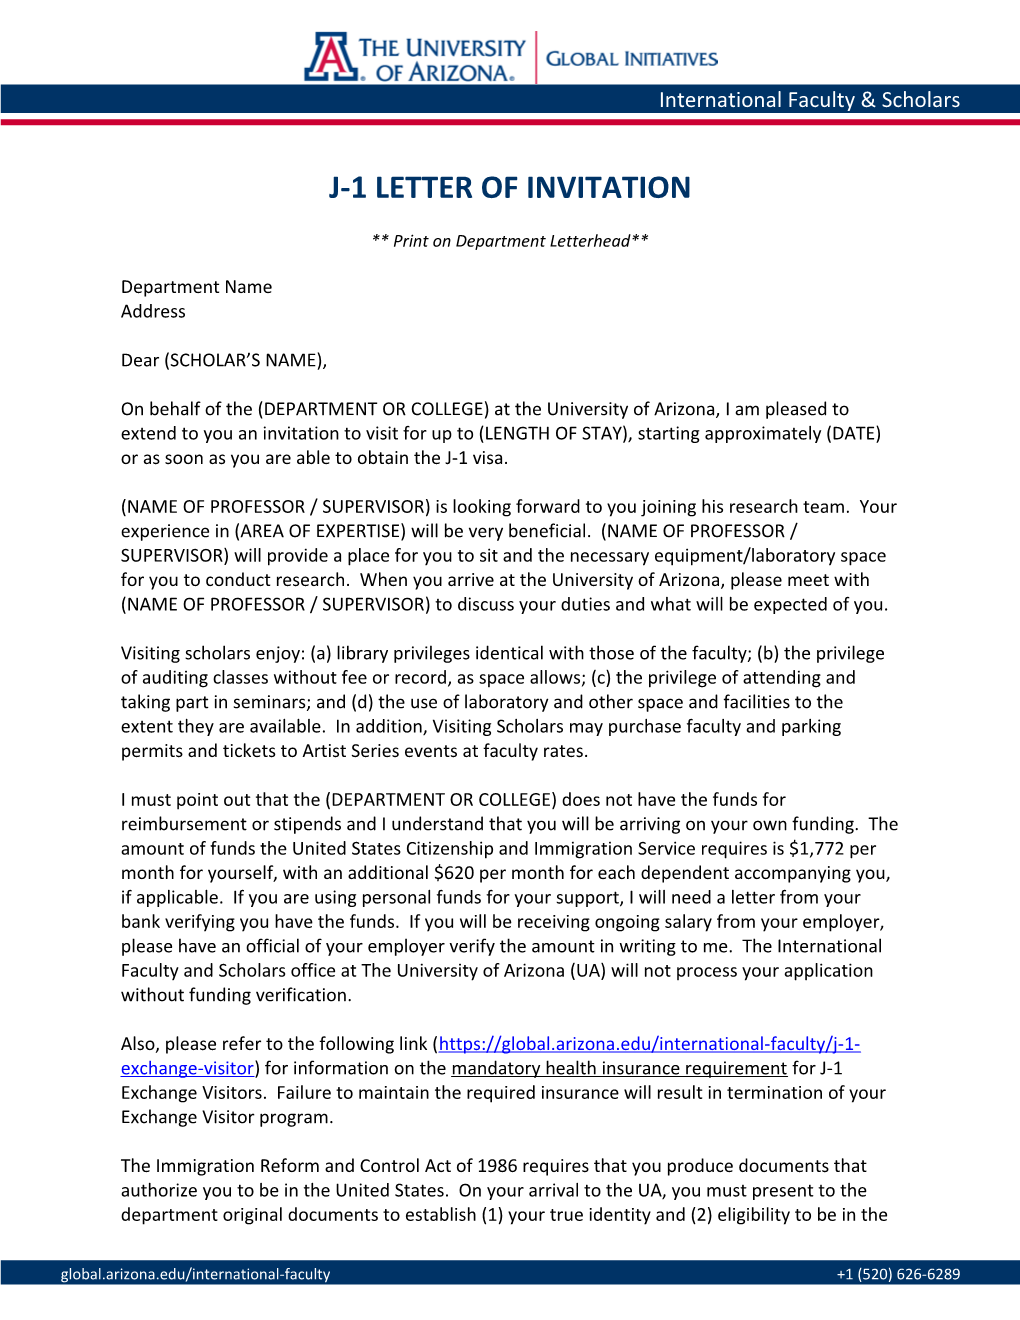 J-1 Letter of Invitation